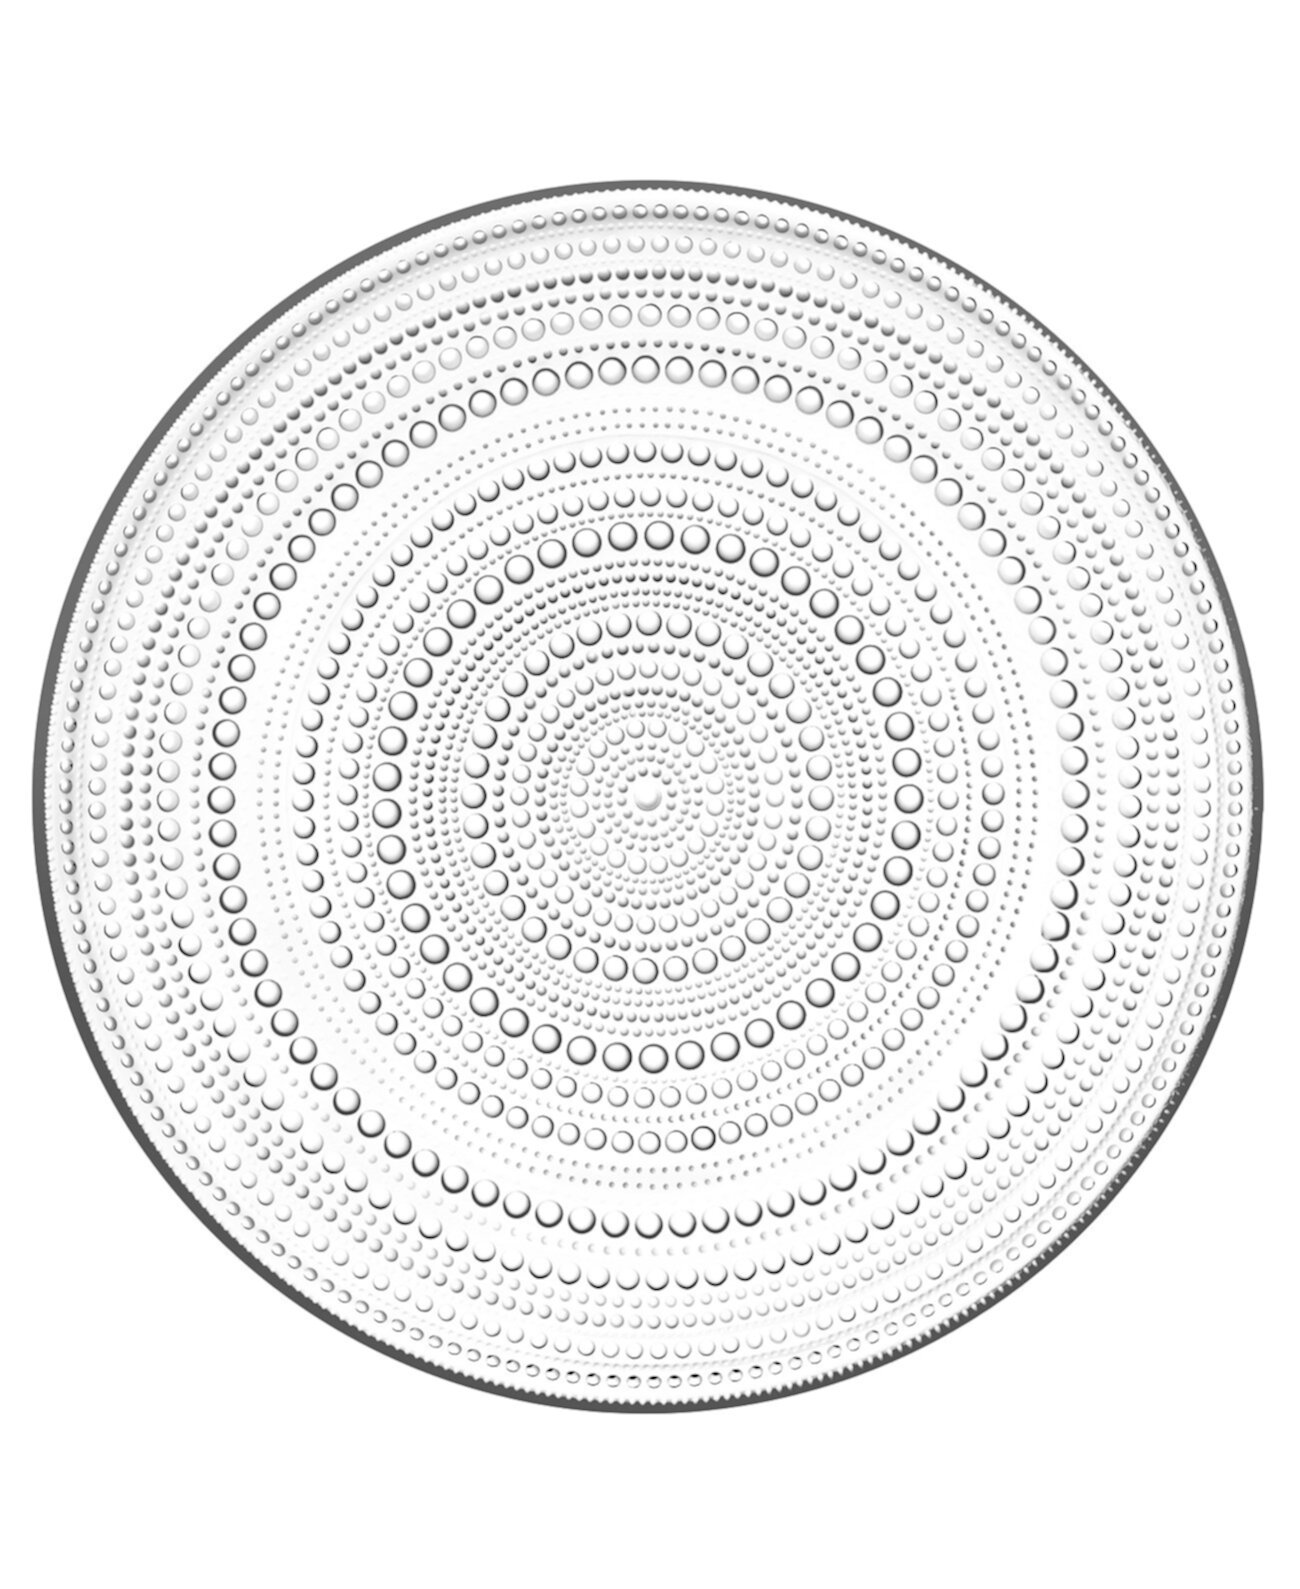 Посуда, Kastehelmi Clear, большая тарелка 12,25 дюйма Iittala